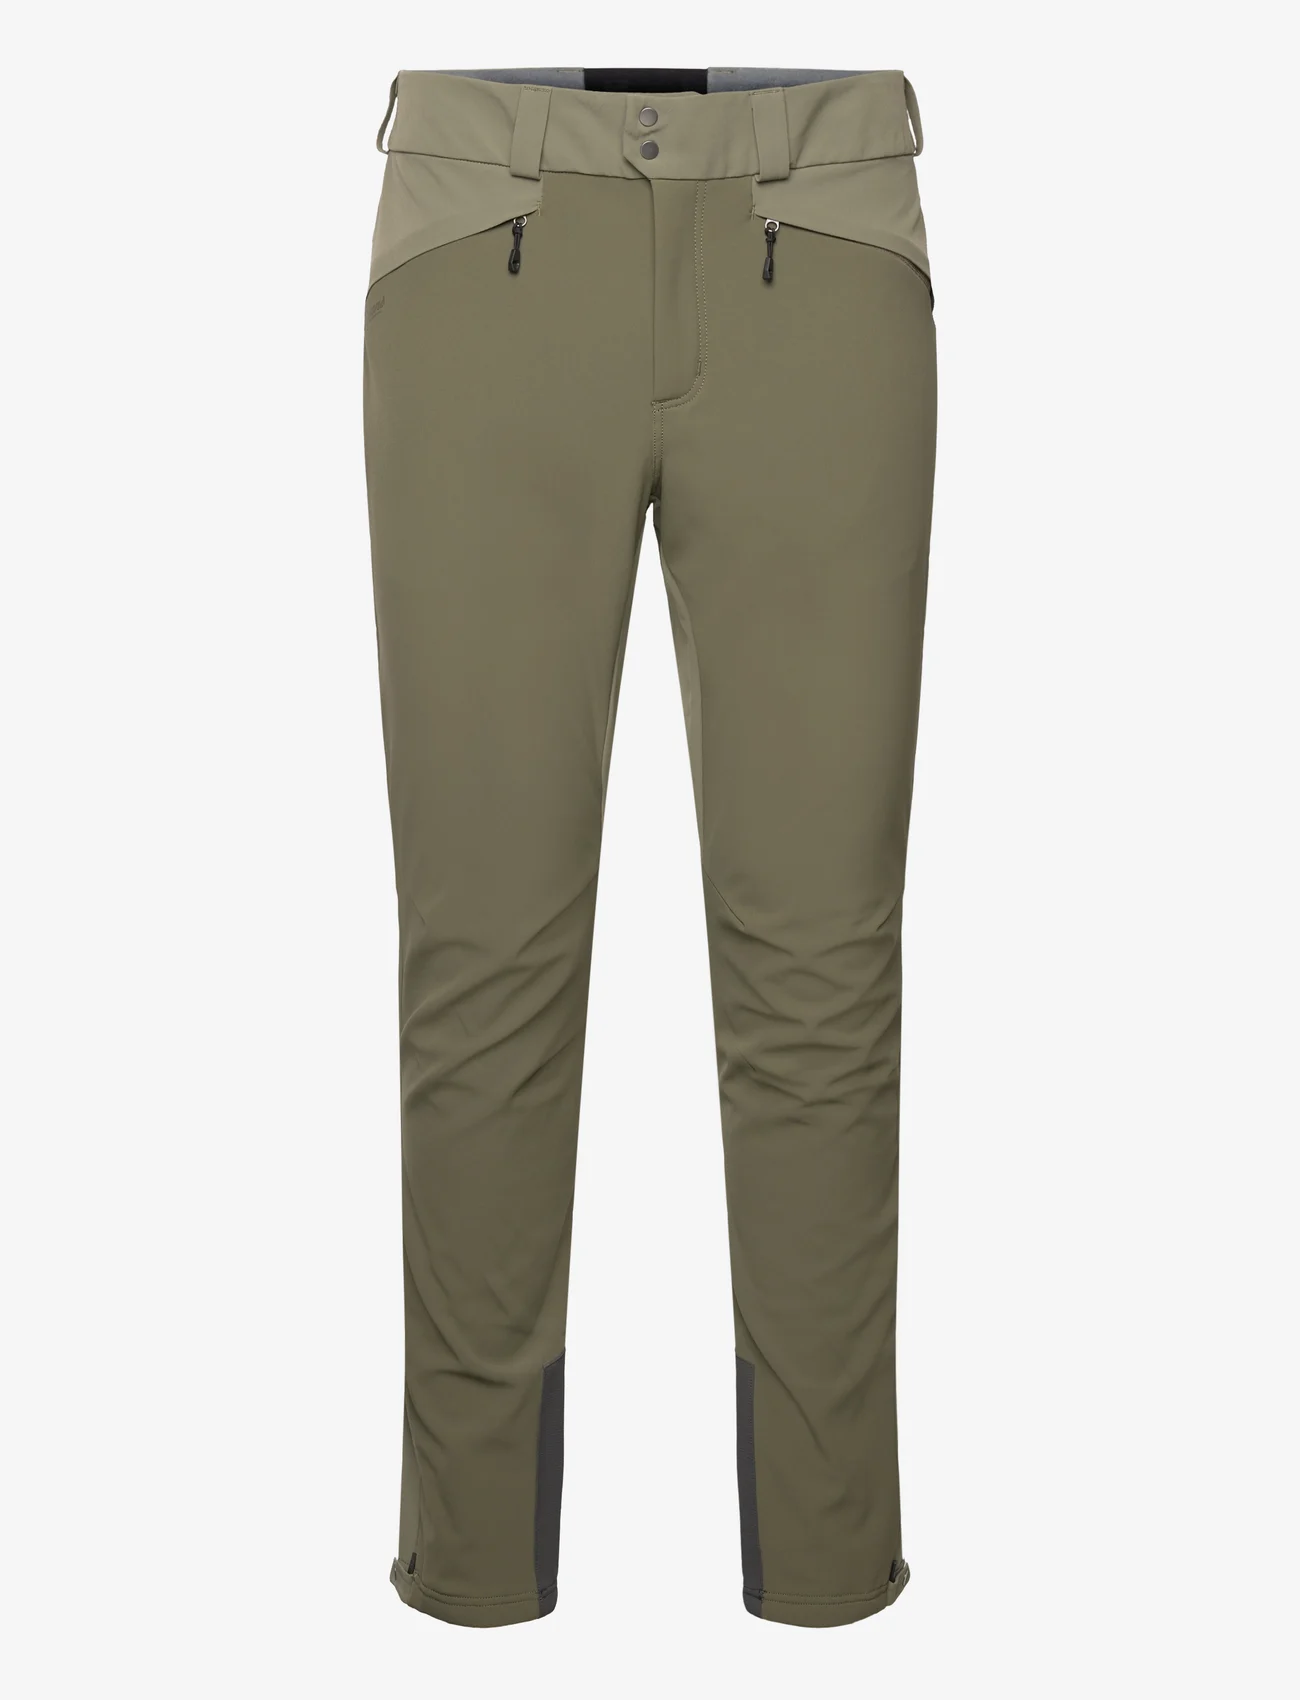 Bergans - Istjern Warm Flex Pant - skihosen - dark green mud/green mud - 0